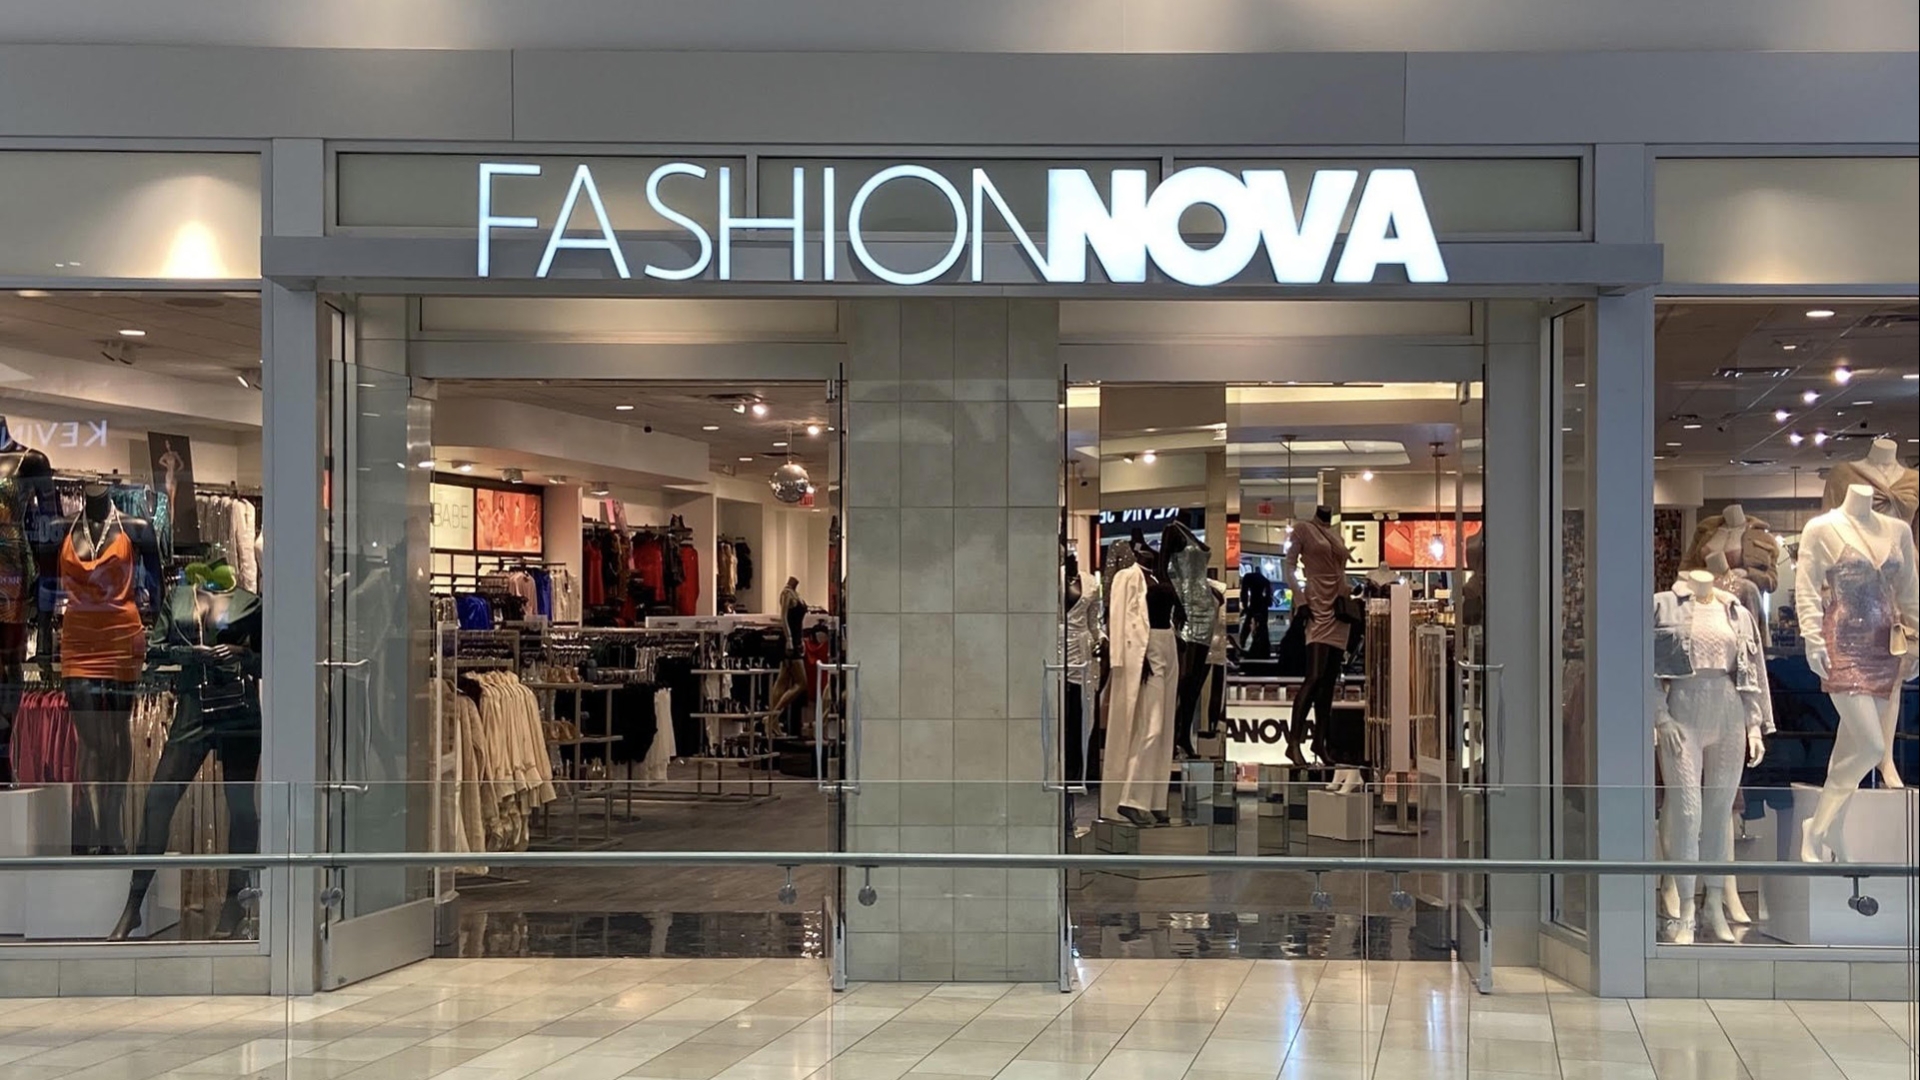 Fashion Nova Marketing